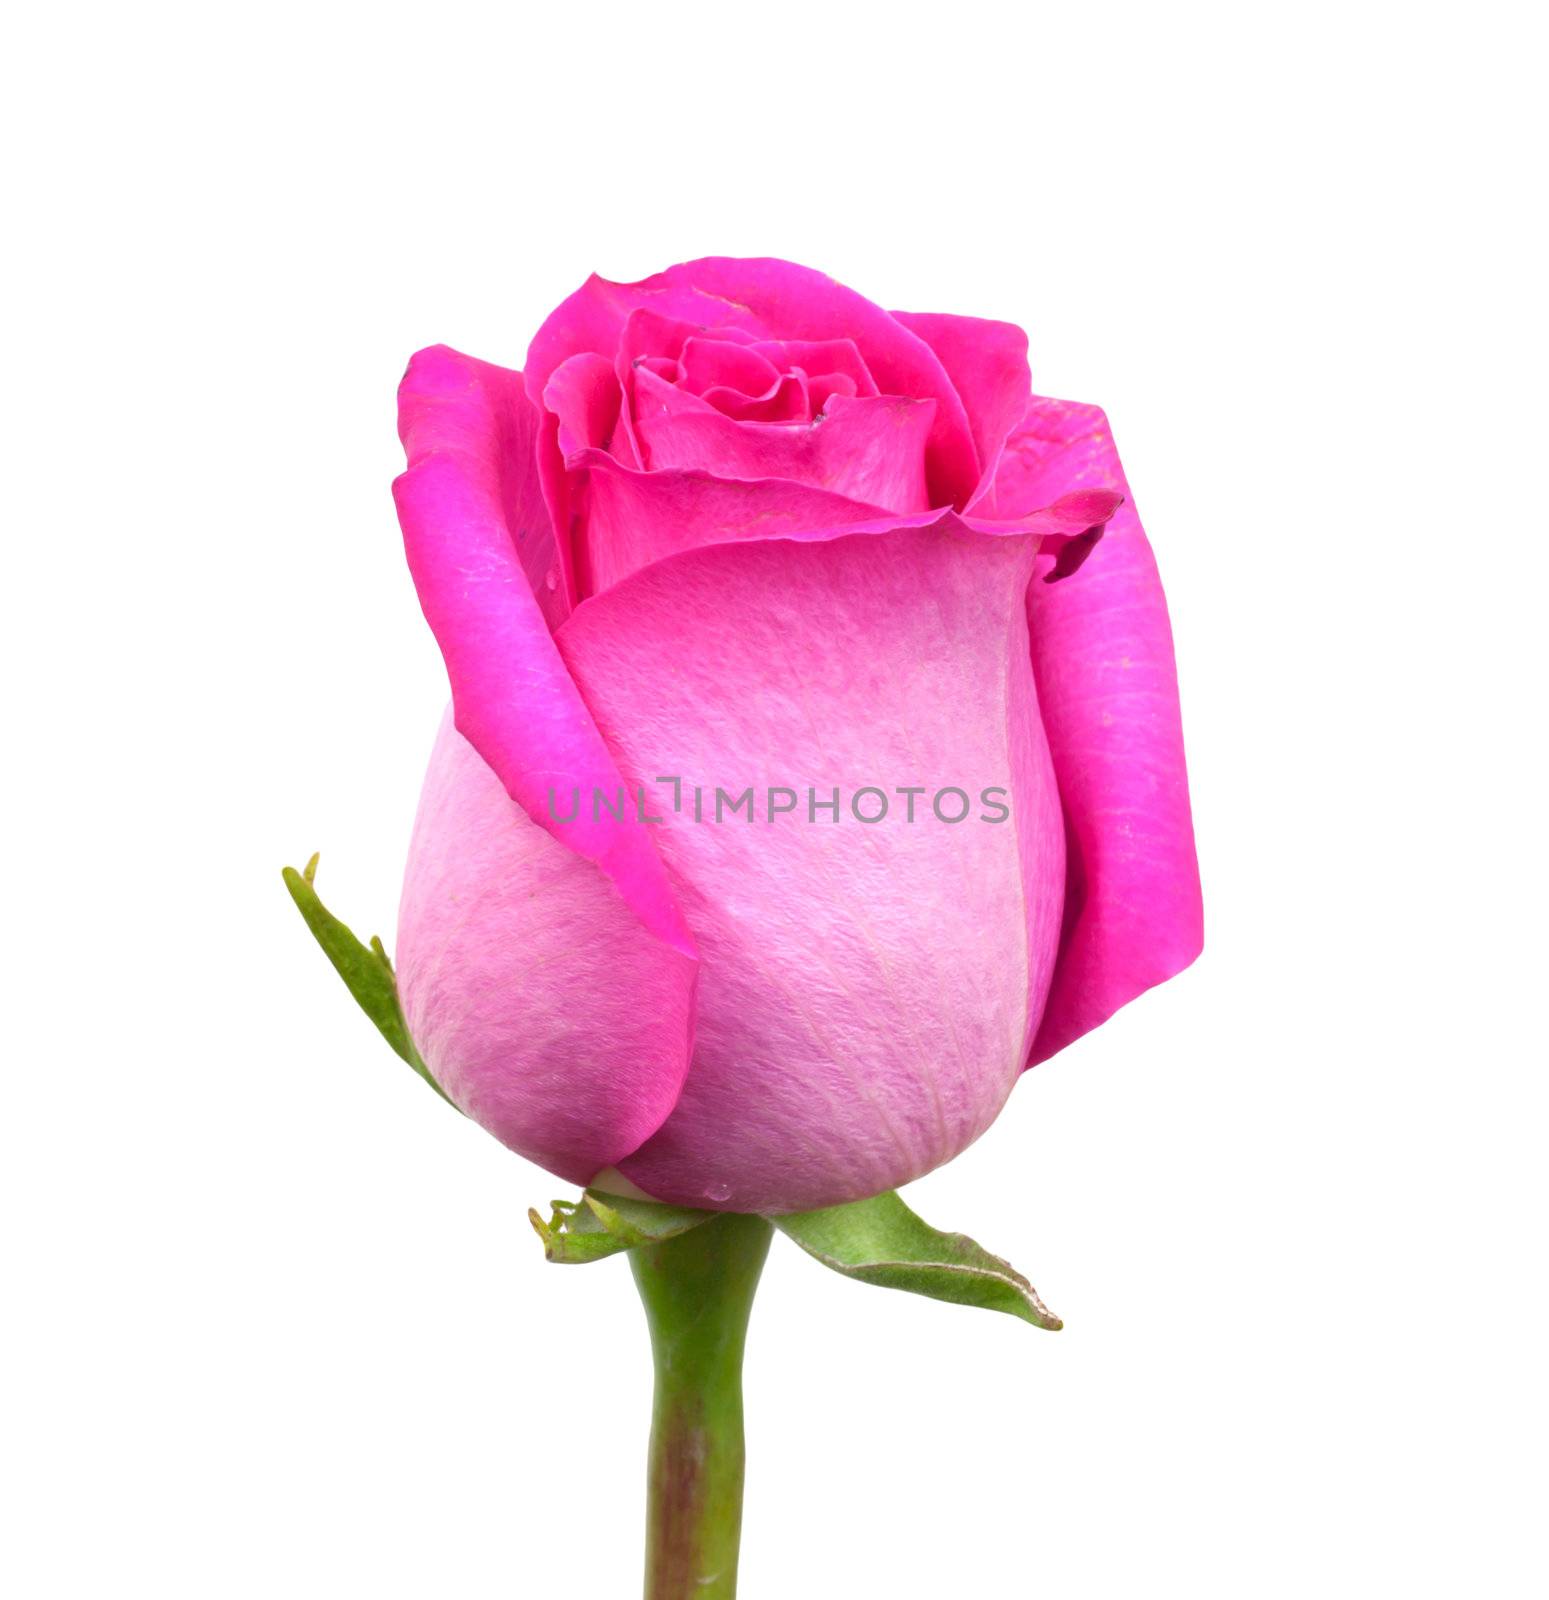 Pink rose on a white background  by schankz